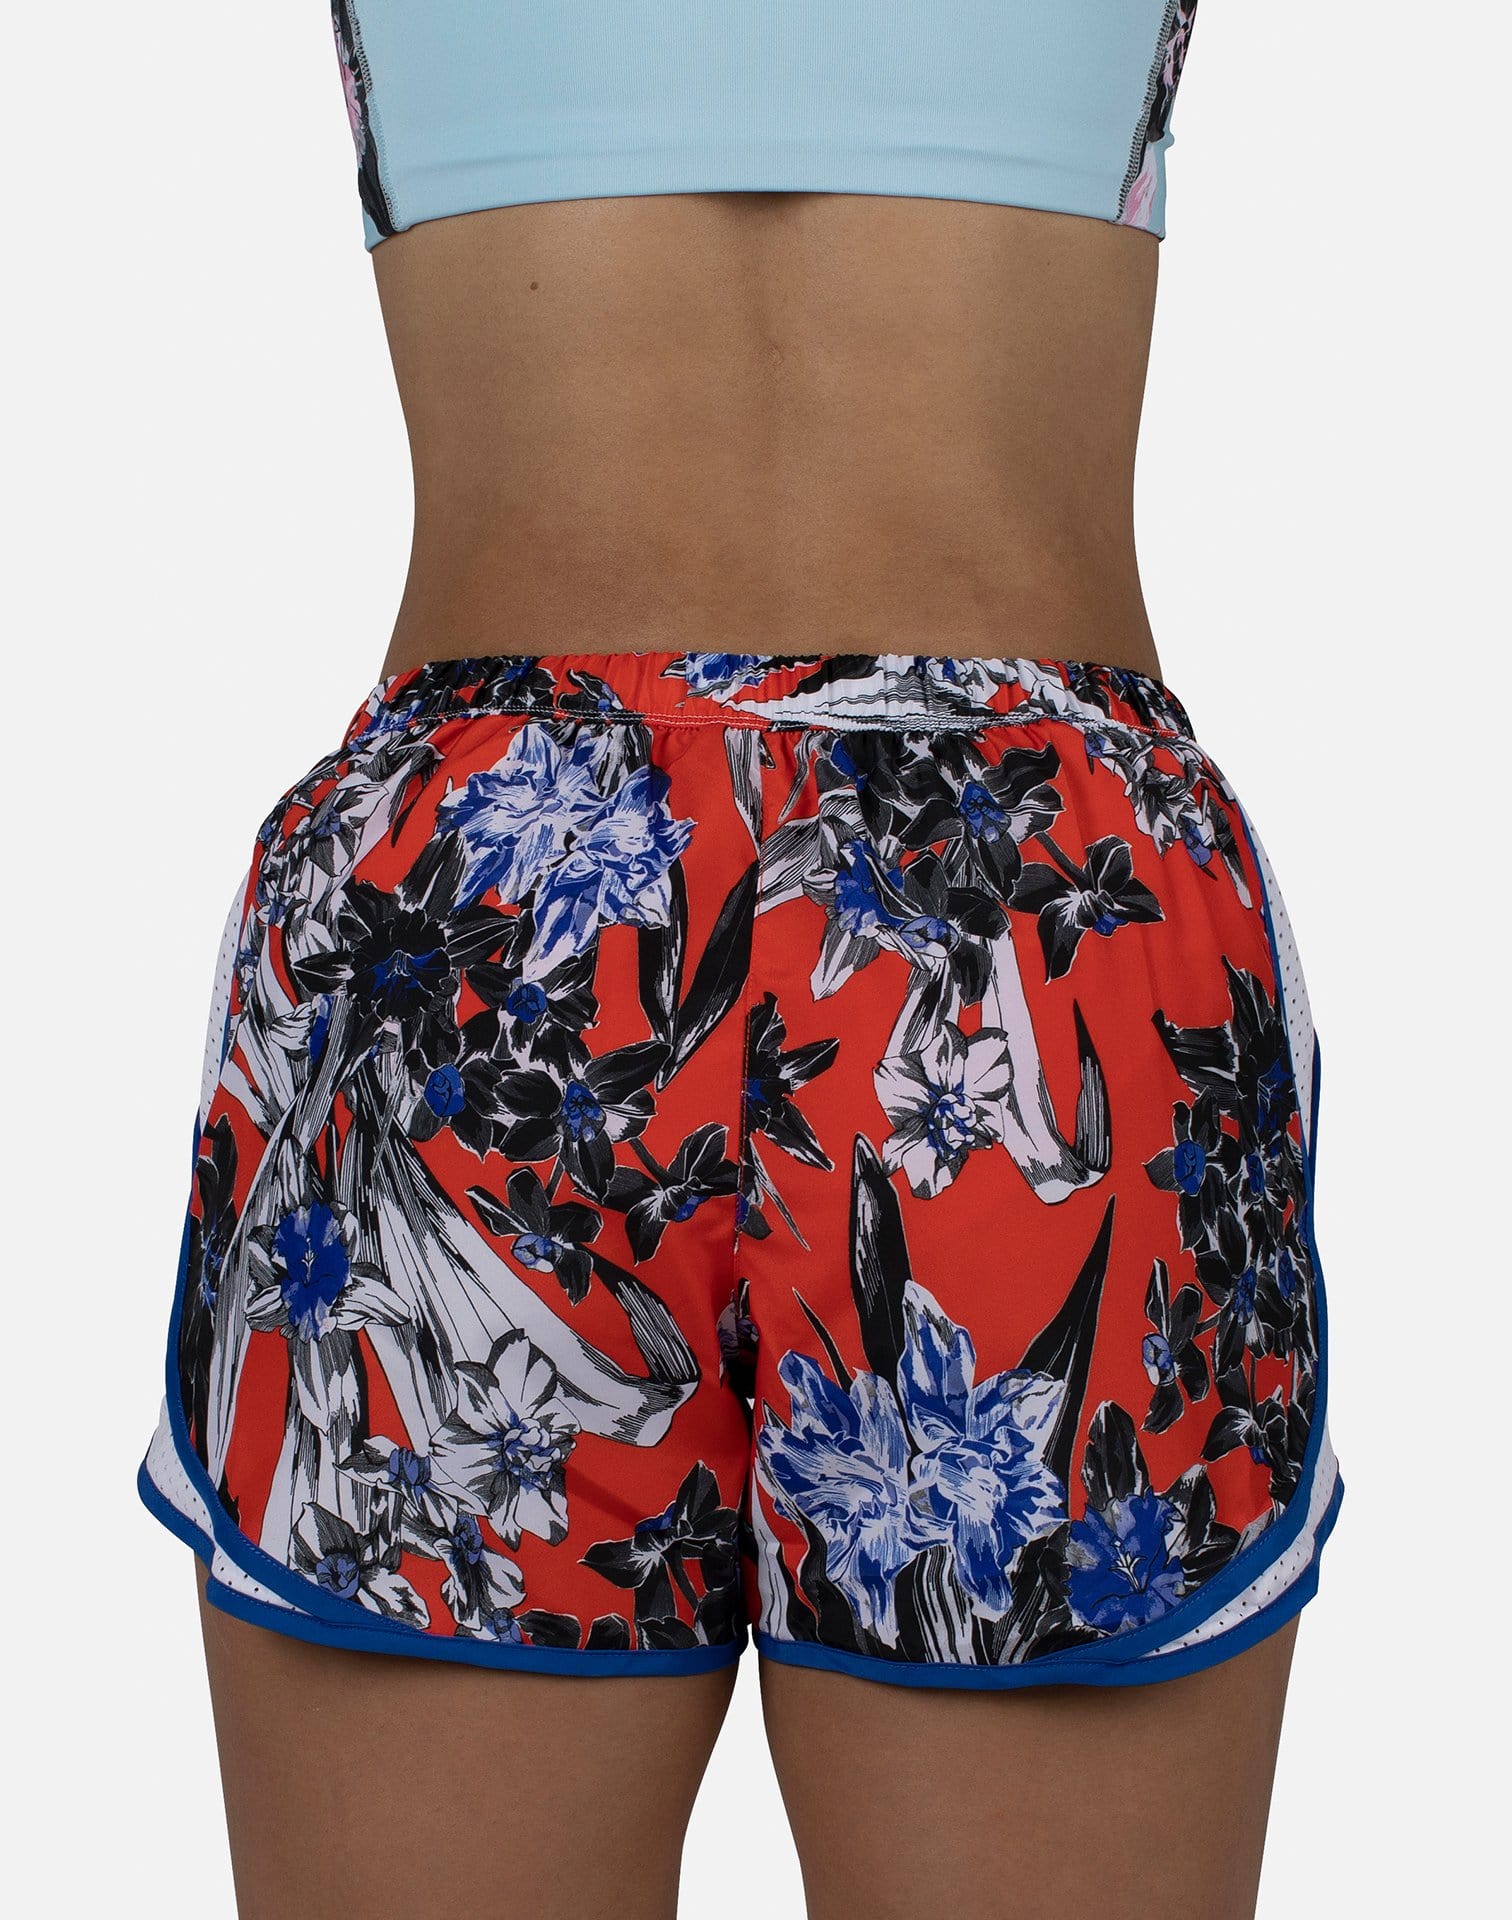 Nike Women's Tempo Hyper Femme Floral Shorts